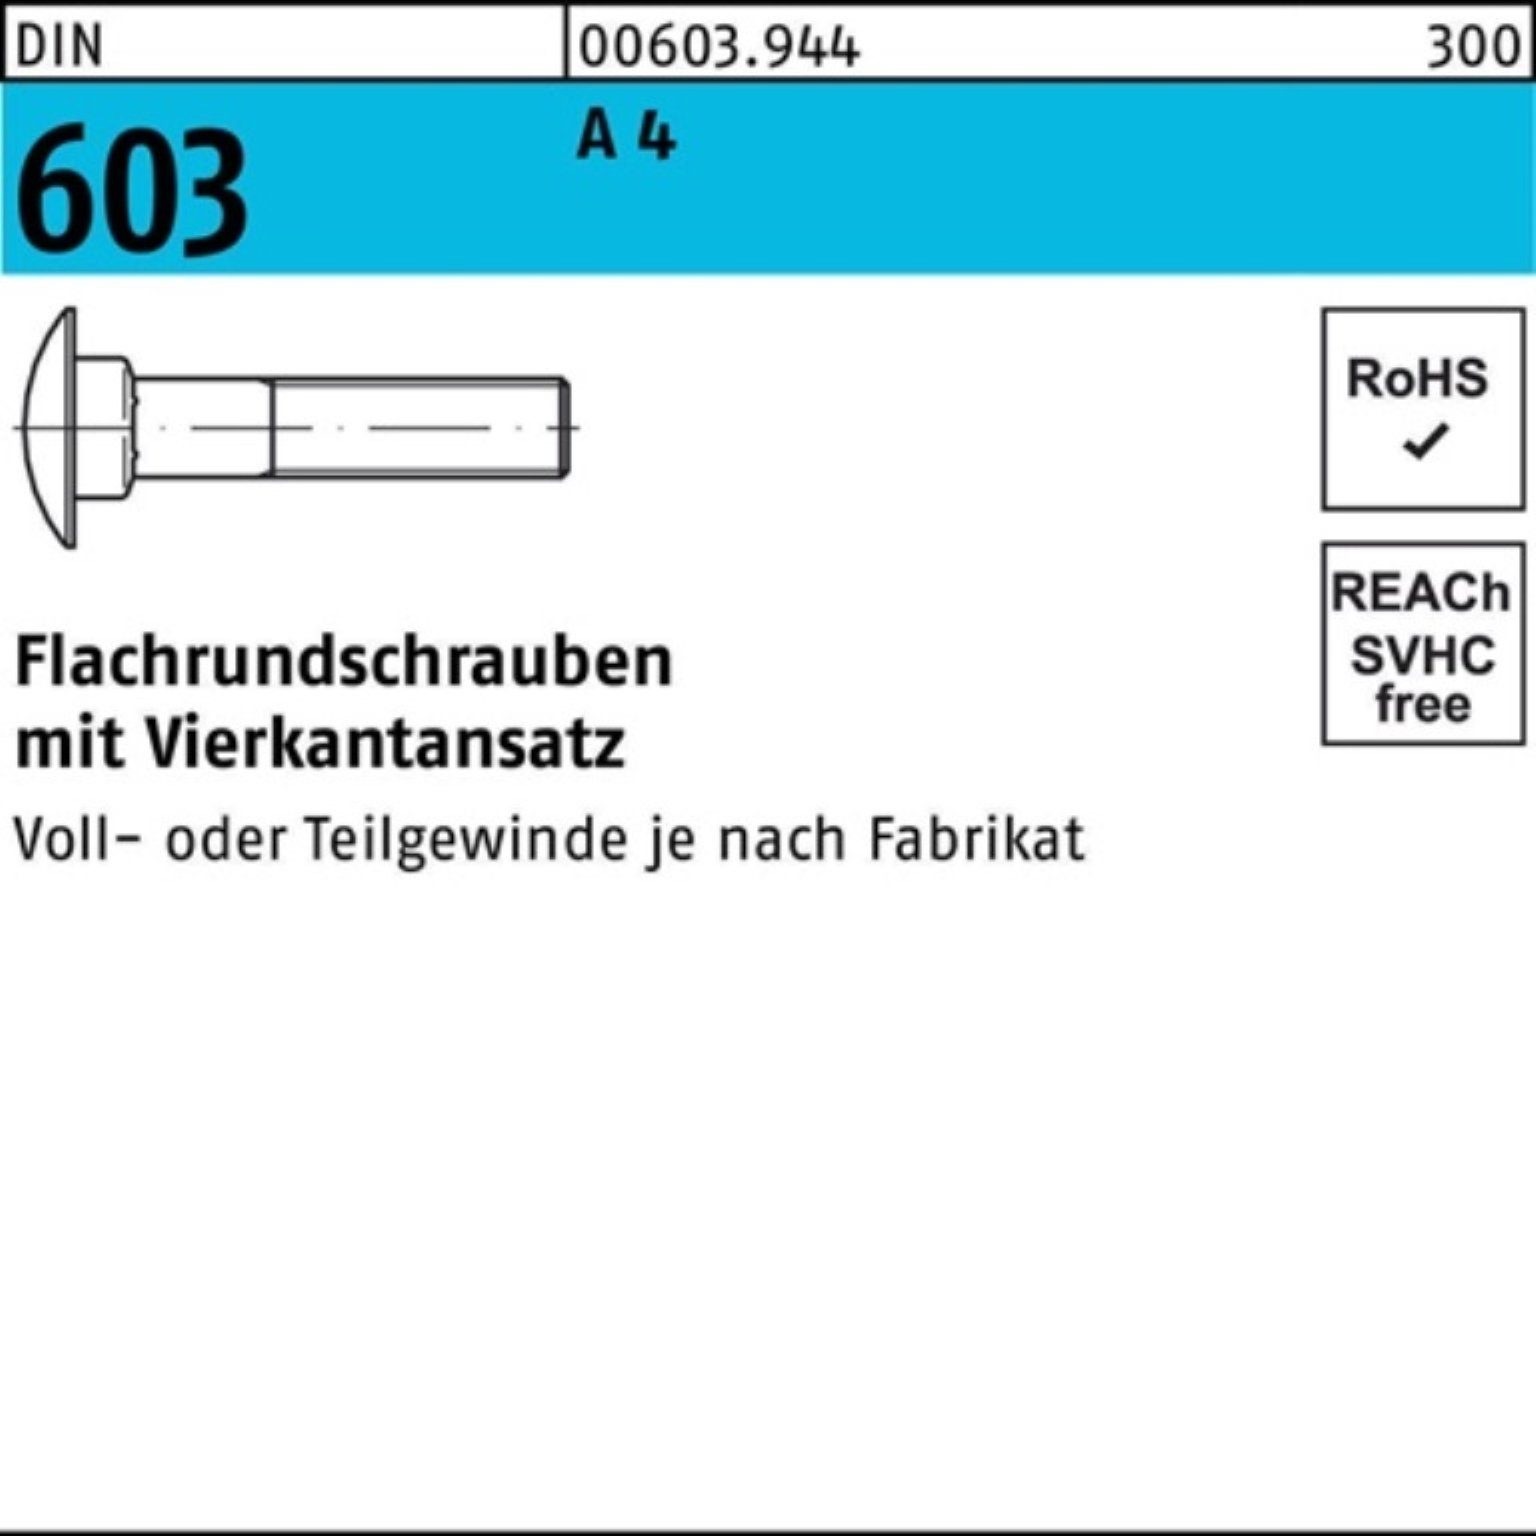 Reyher Schraube 100er Pack Flachrundschraube DIN 603 Vierkantansatz M10x 20 A 4 10 St